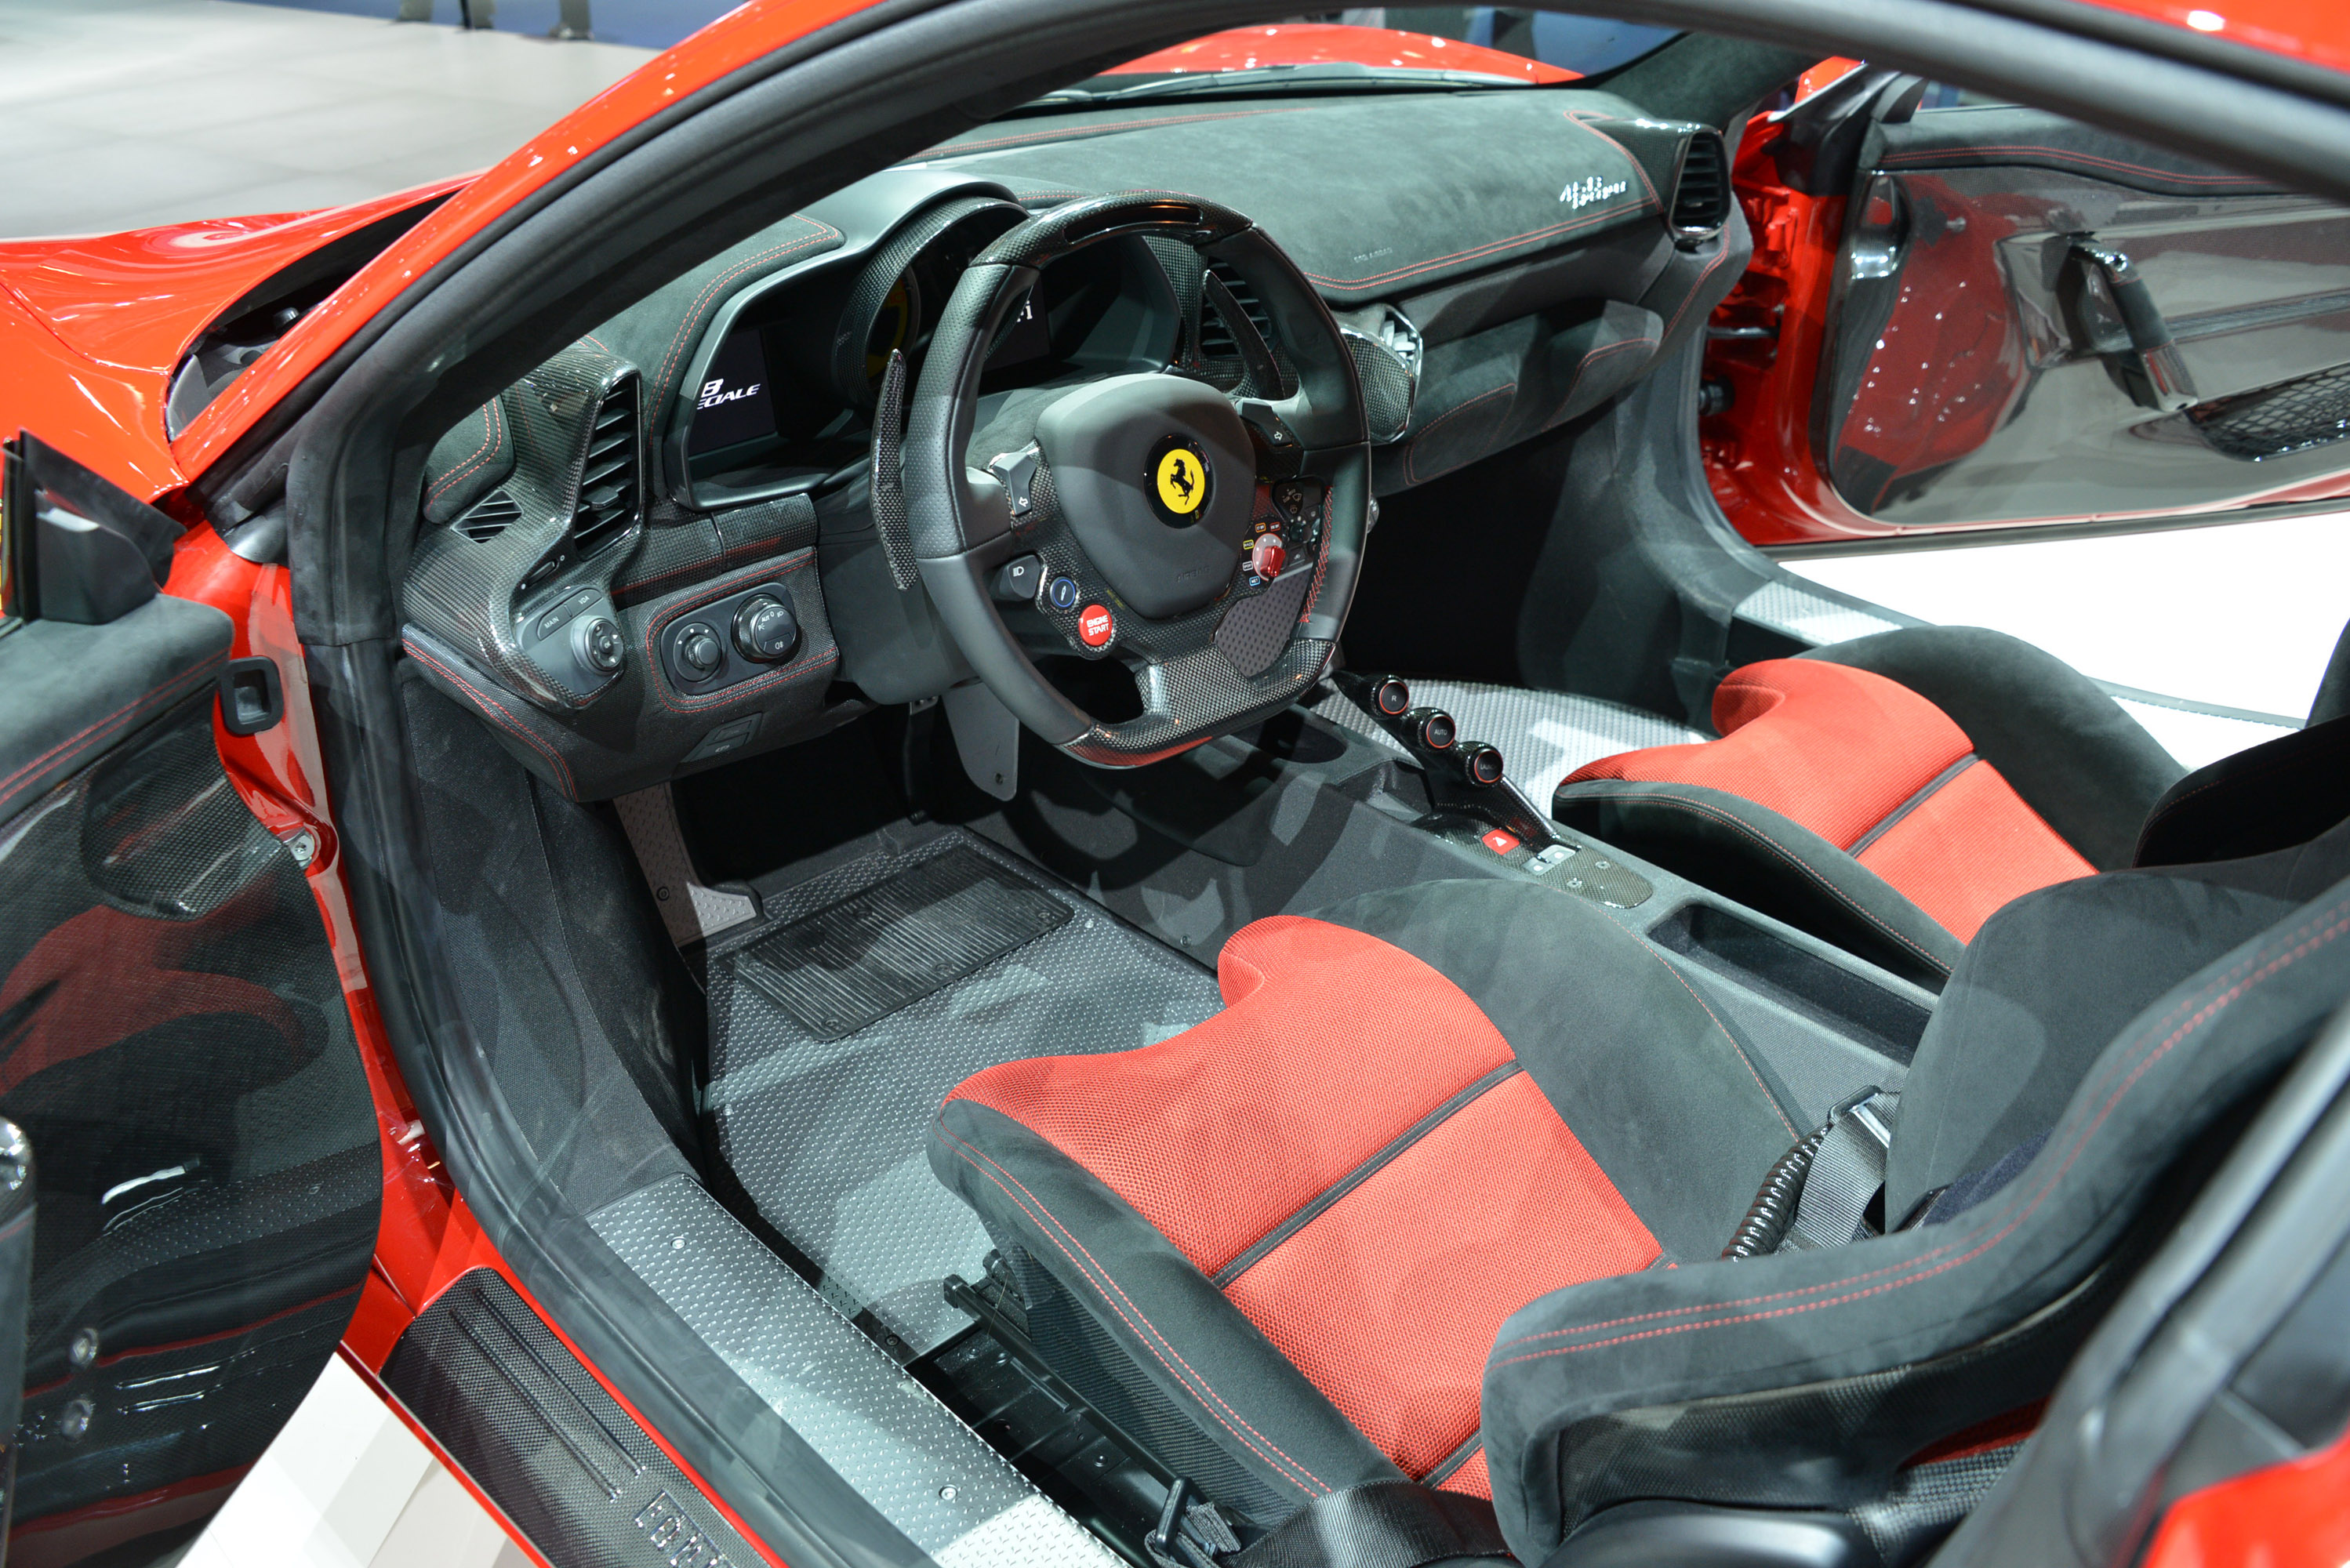 Ferrari 458 Speciale Frankfurt